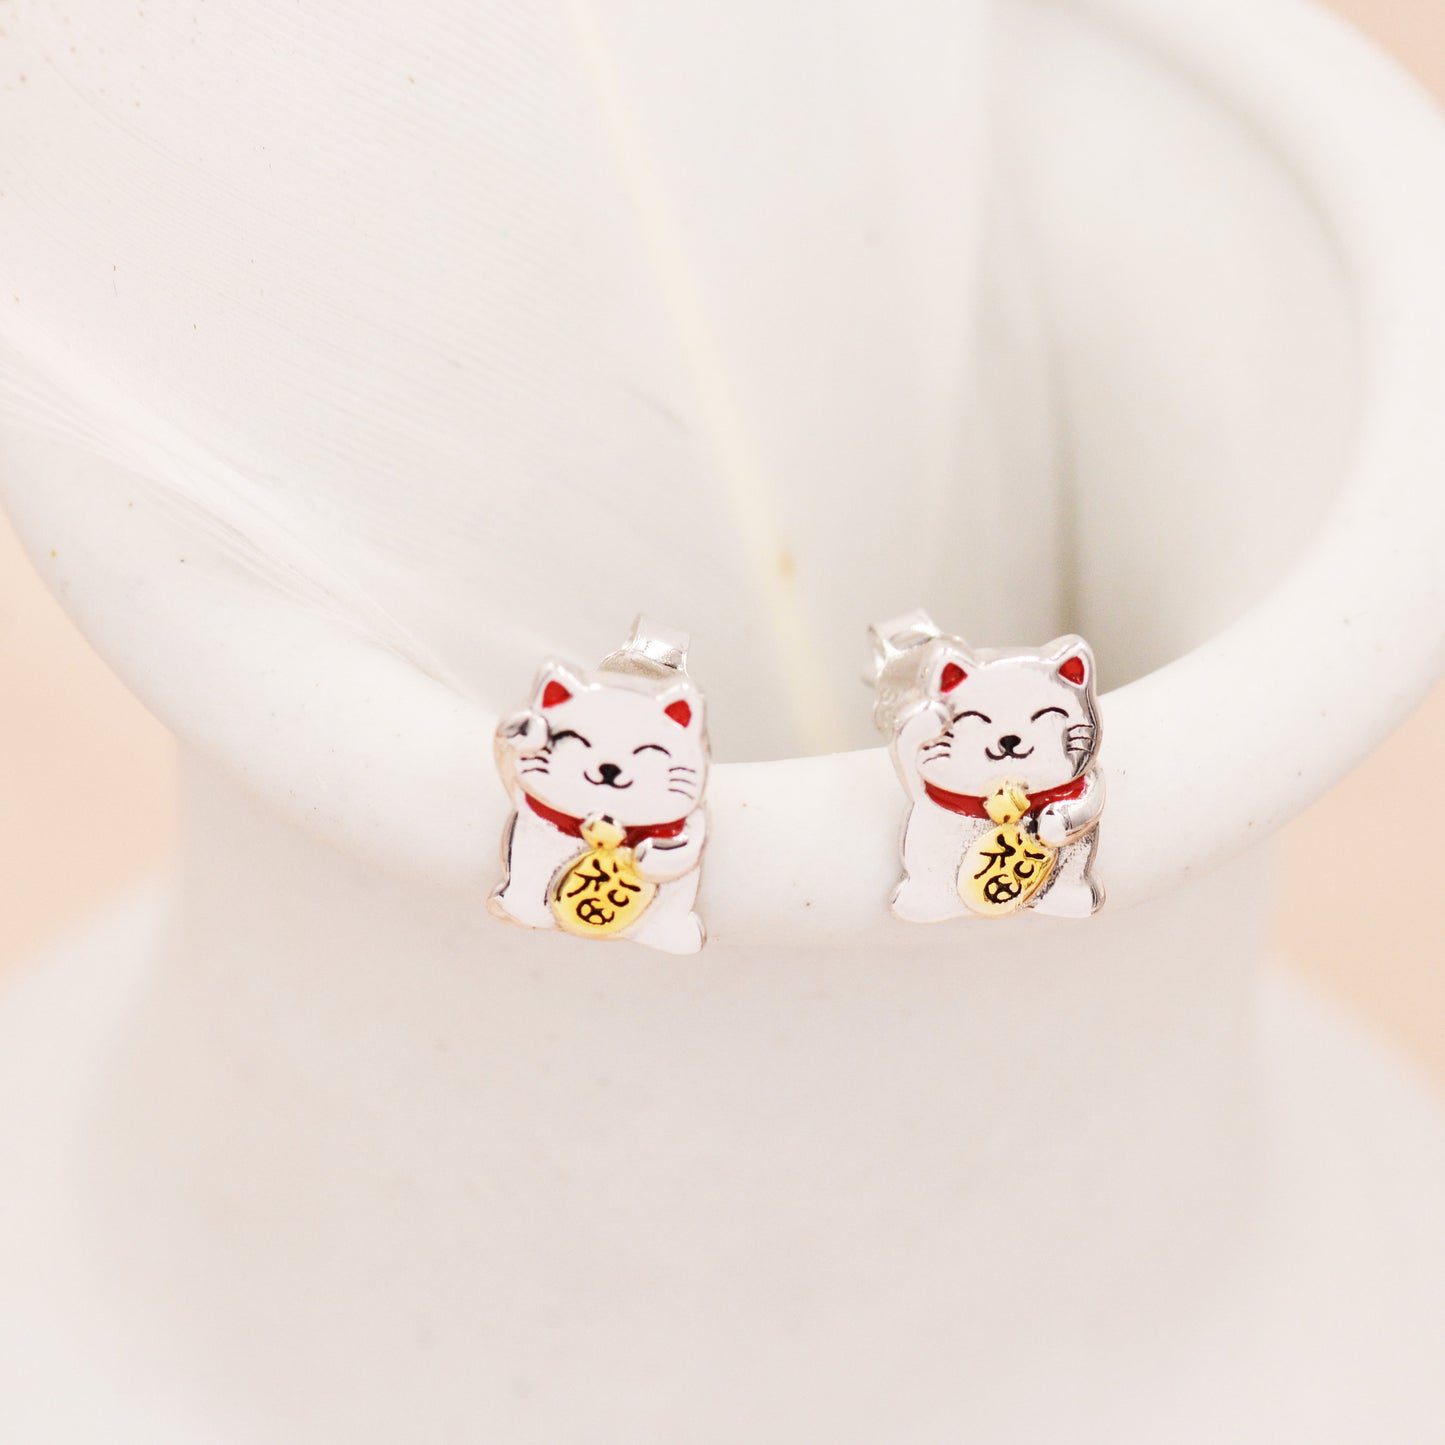 Super Cute Japanese Maneki-neko Cat Stud Earrings in Sterling Silver - Animal Stud Earrings  - Cute Money Cat, Waving Cat Stud, Cat Earrings